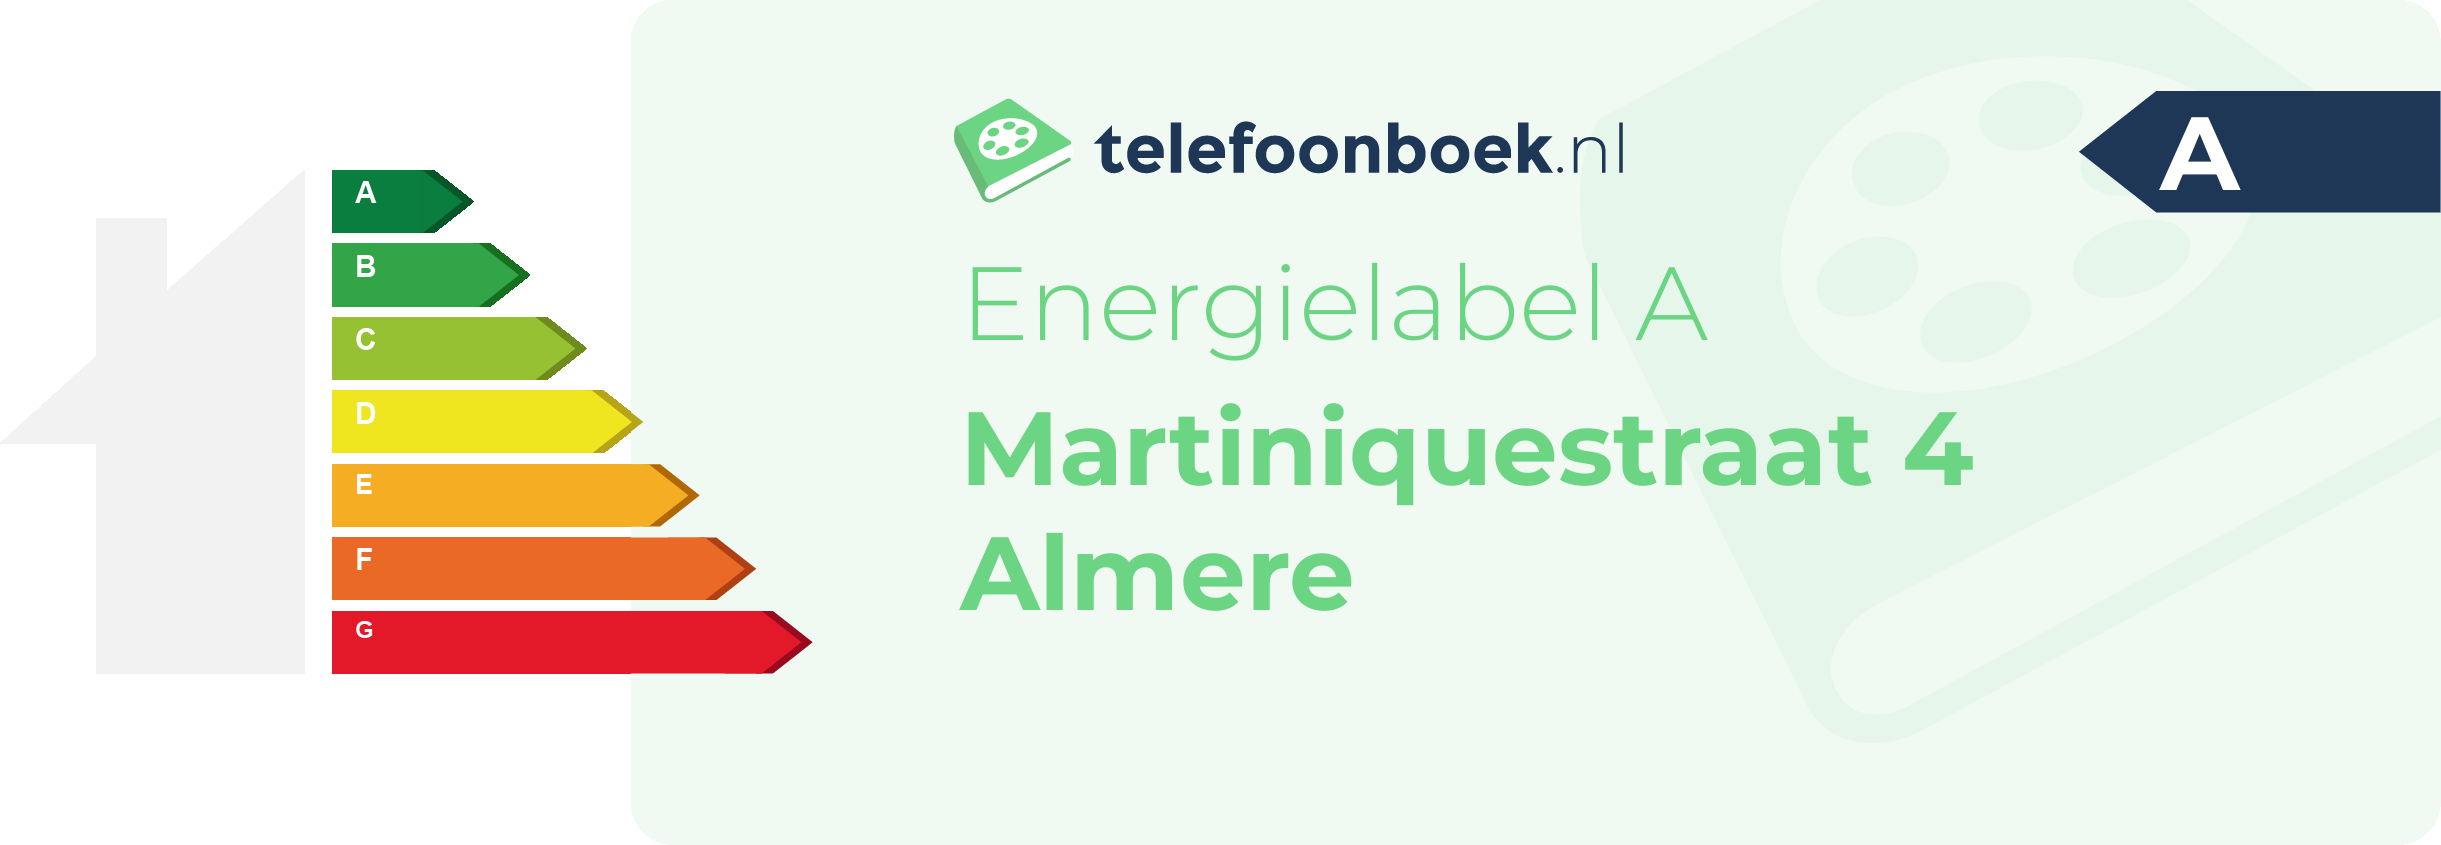 Energielabel Martiniquestraat 4 Almere